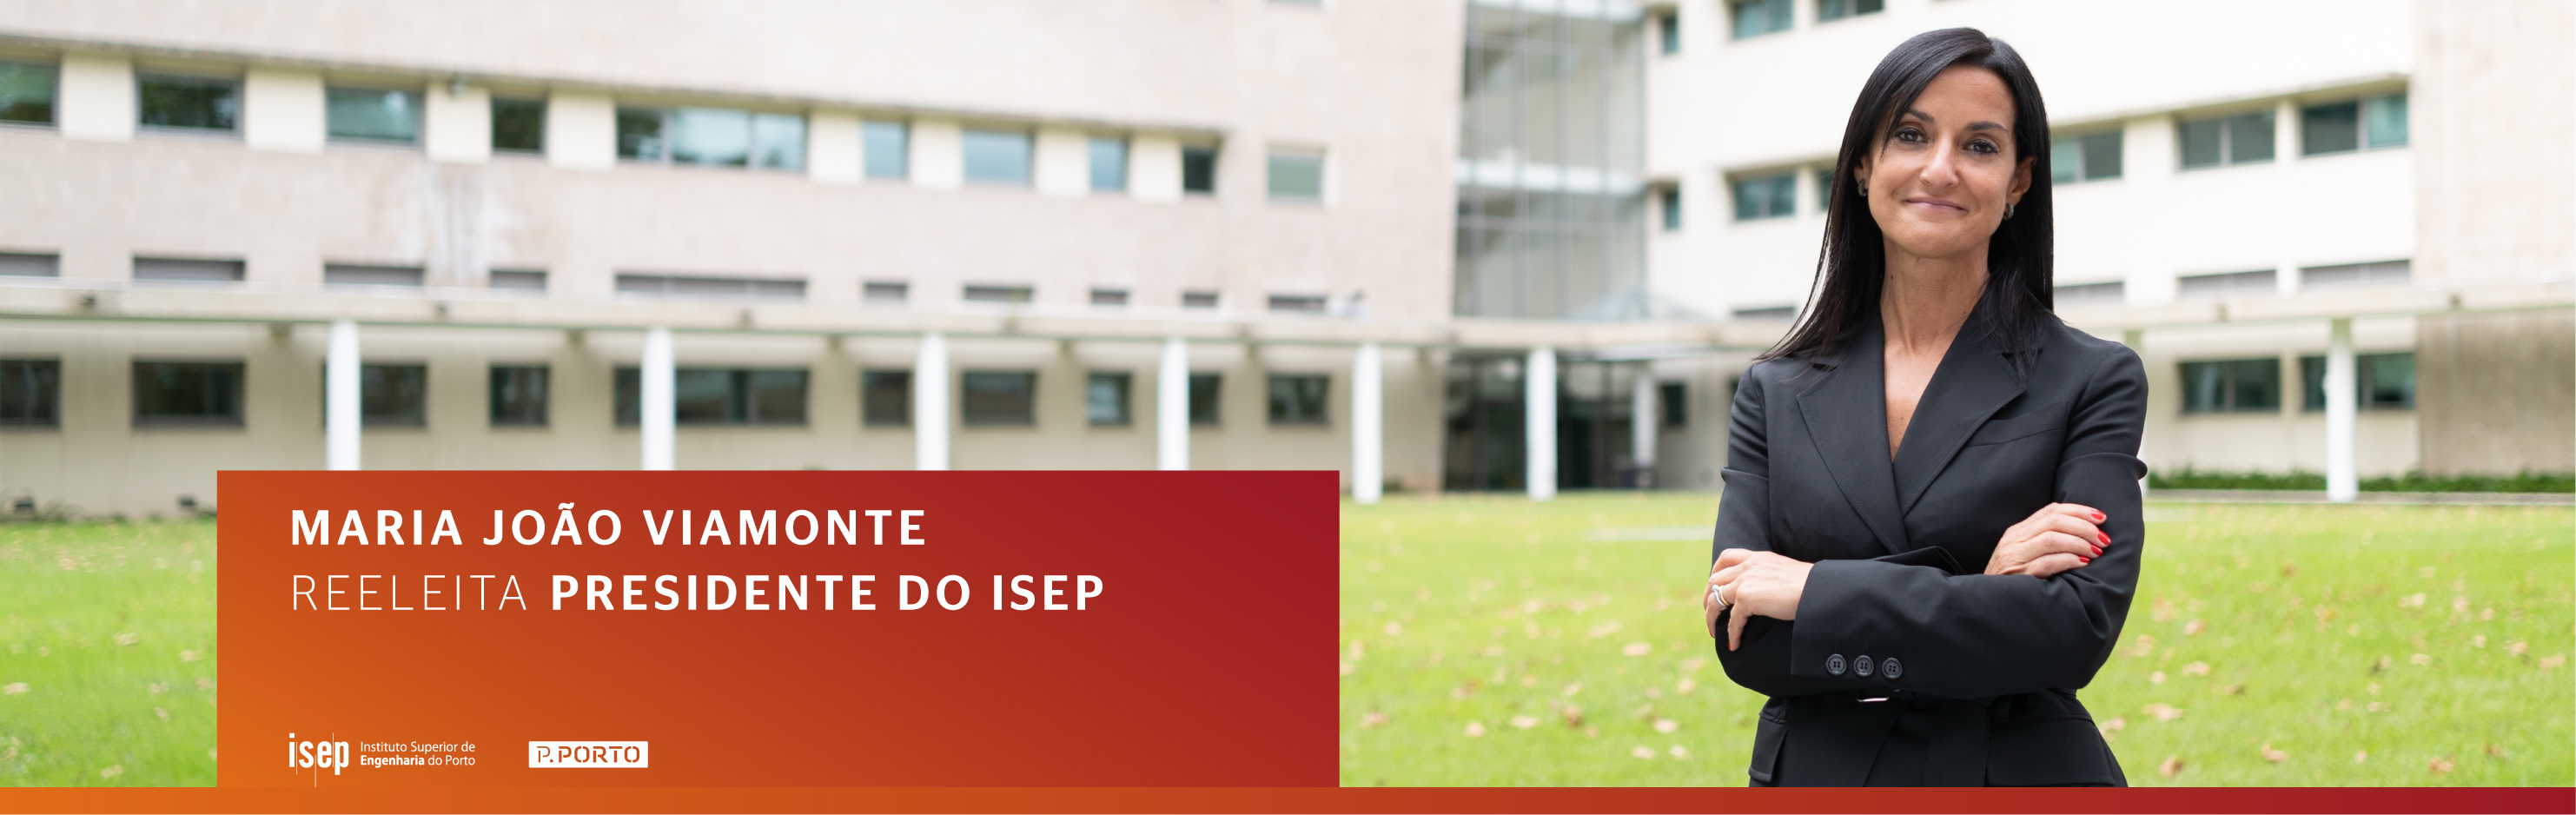 Maria João Viamonte reeleita presidente do ISEP